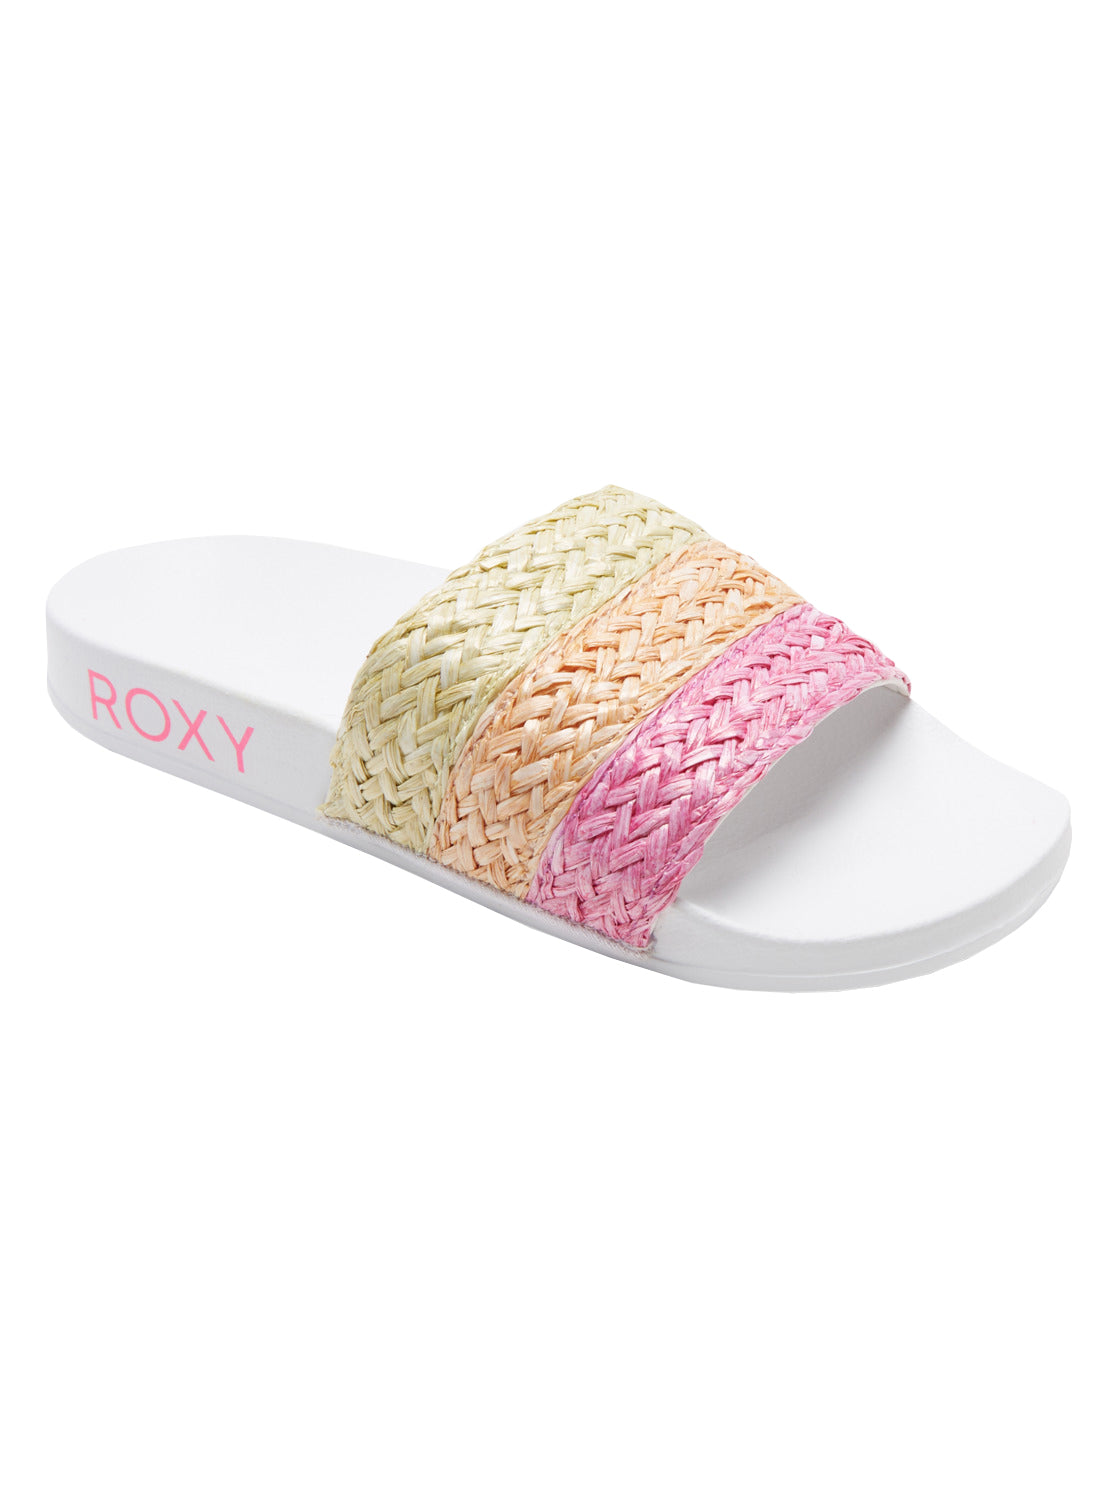 Roxy Slippy Jute Womens Sandal TPO-White-Crazy Pink-Orange 9